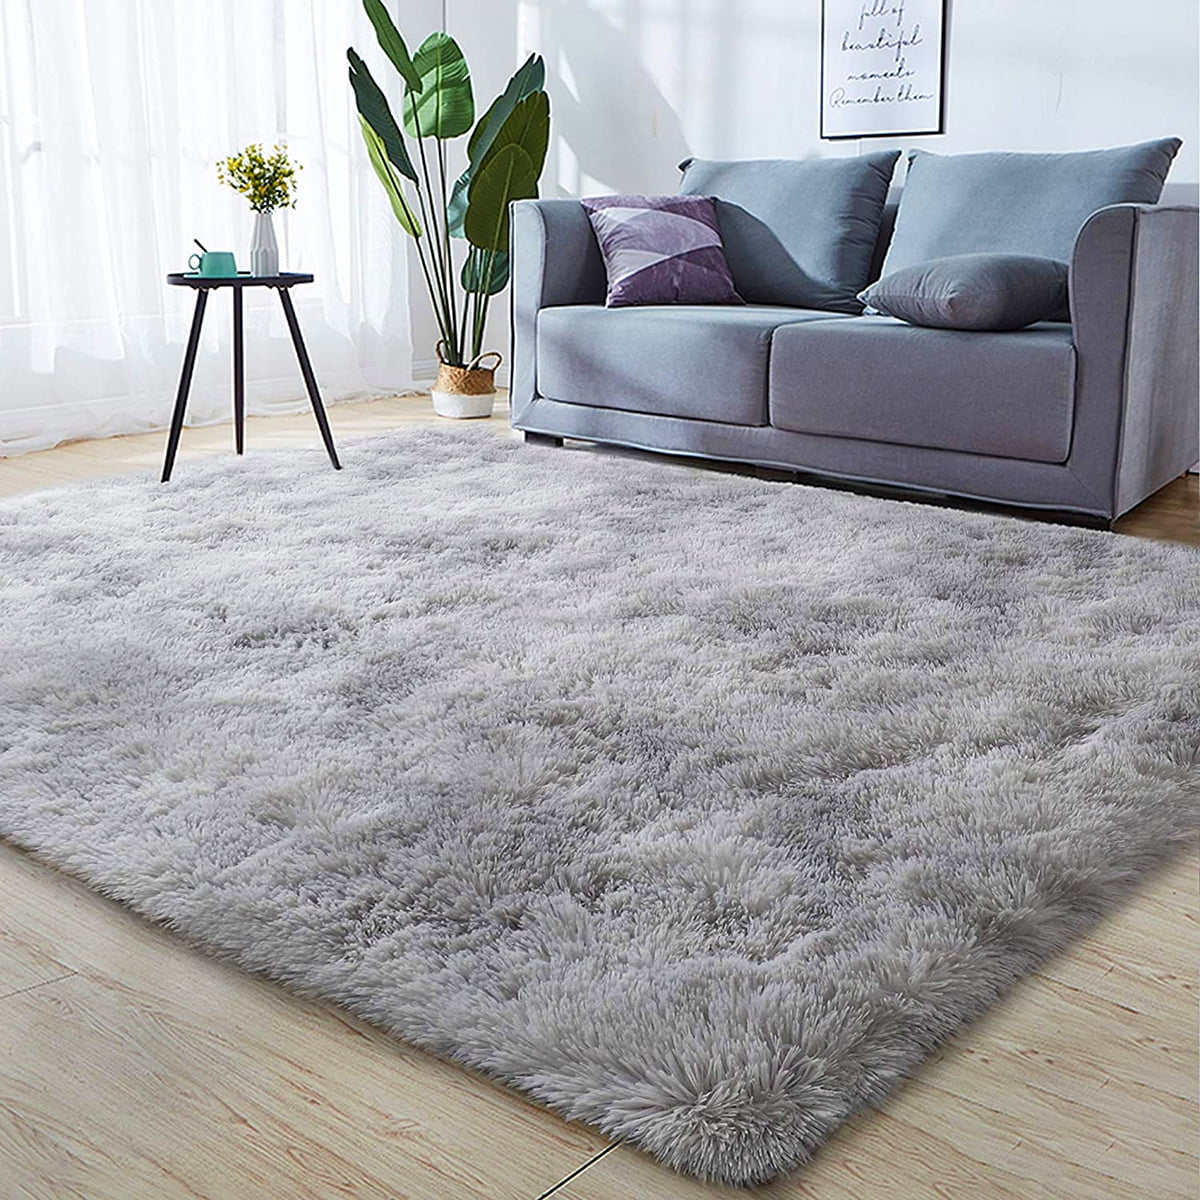 Soft Fur Area Rugs Floor Mat Luxury Beside Carpet for Bedroom Living Room Area Rugs 100*160 cm/39.37*62.99 inch in Purple